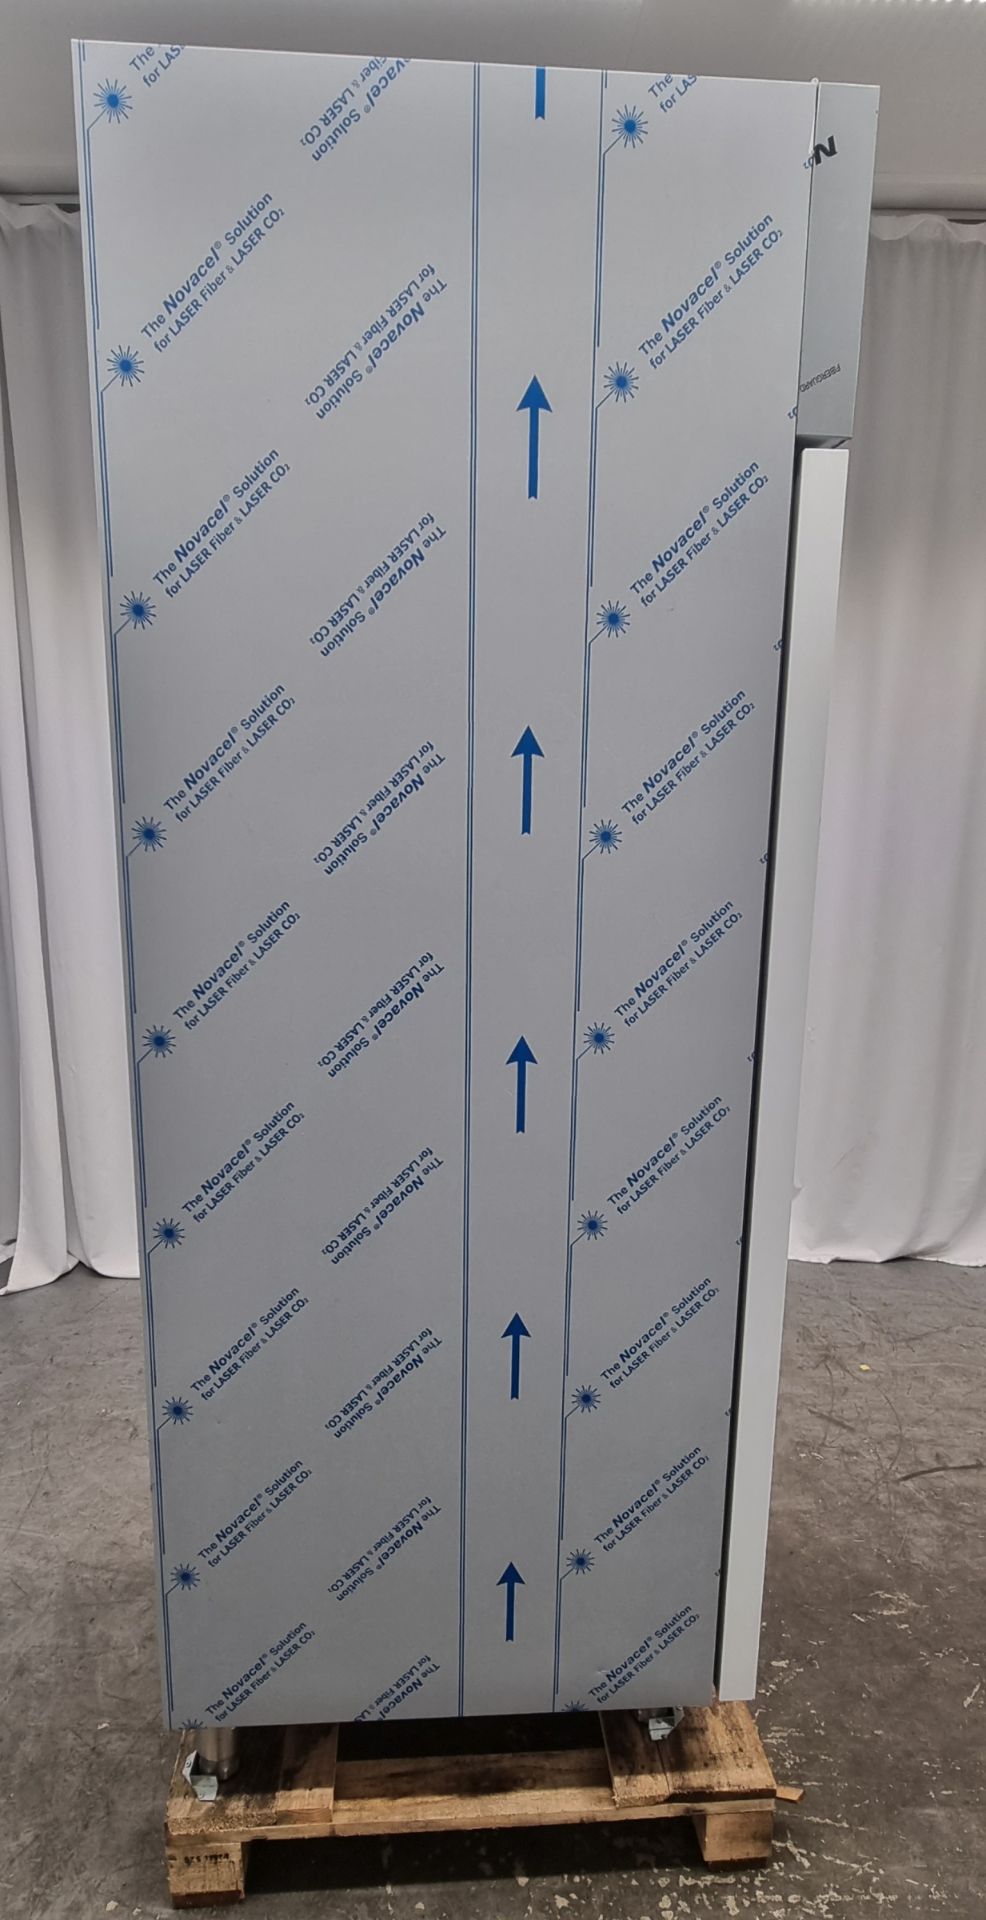 Iceinox VTS 610 CR stainless steel upright, single door refrigerator - Image 10 of 10